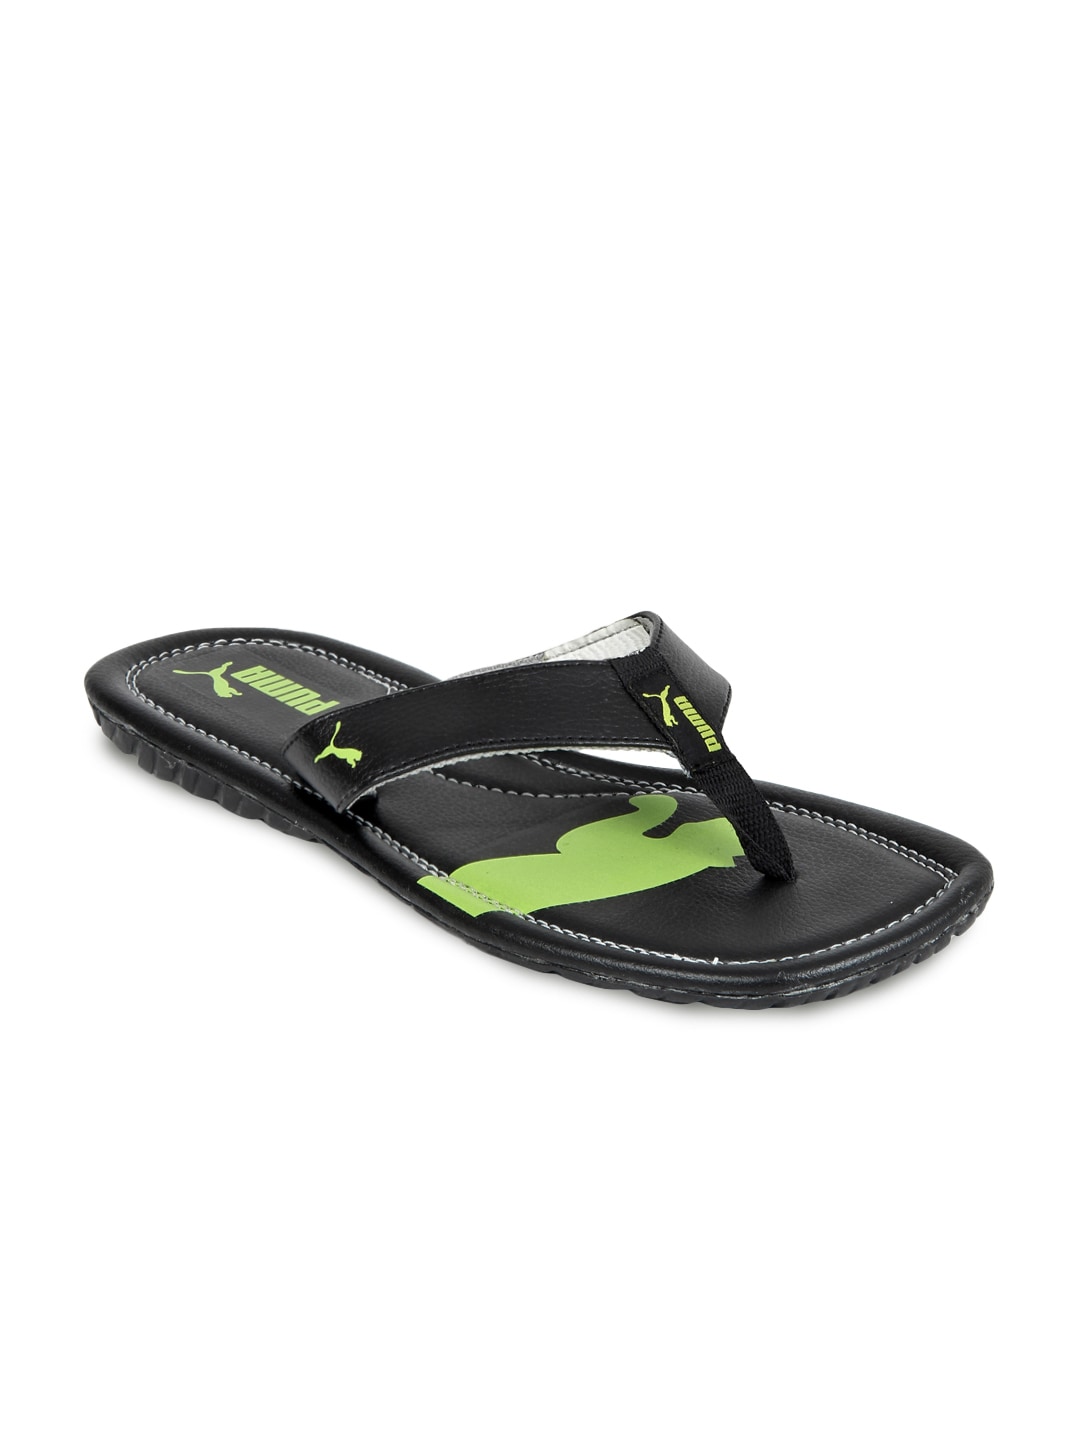 puma sandals lowest price online